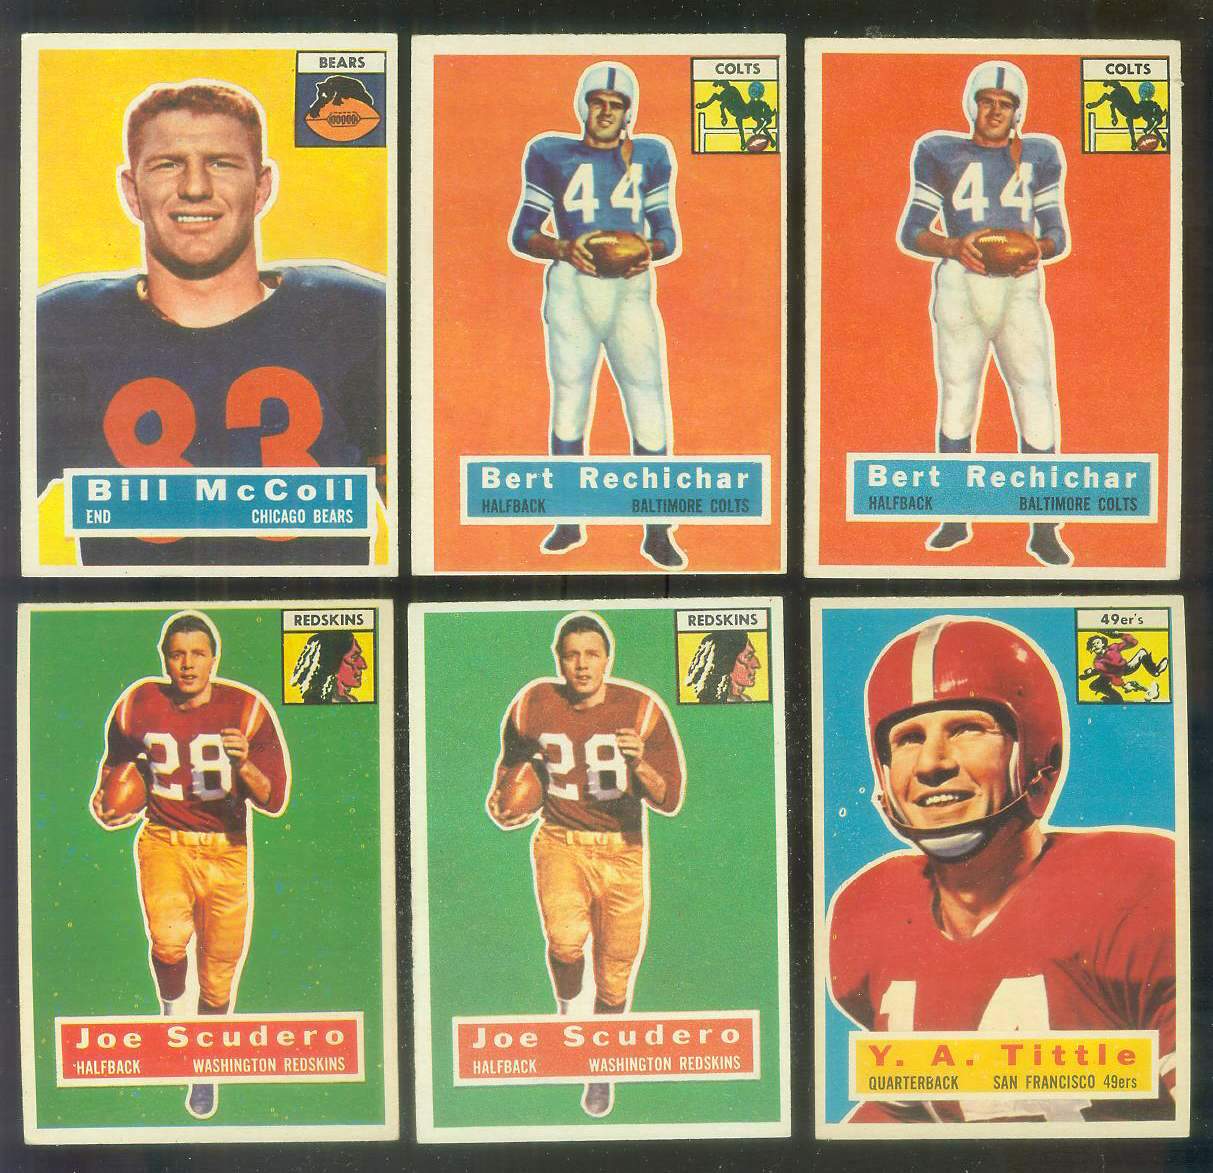 1956 Topps FB # 85 Joe Scudero SHORT PRINT (Redskins) Football cards value